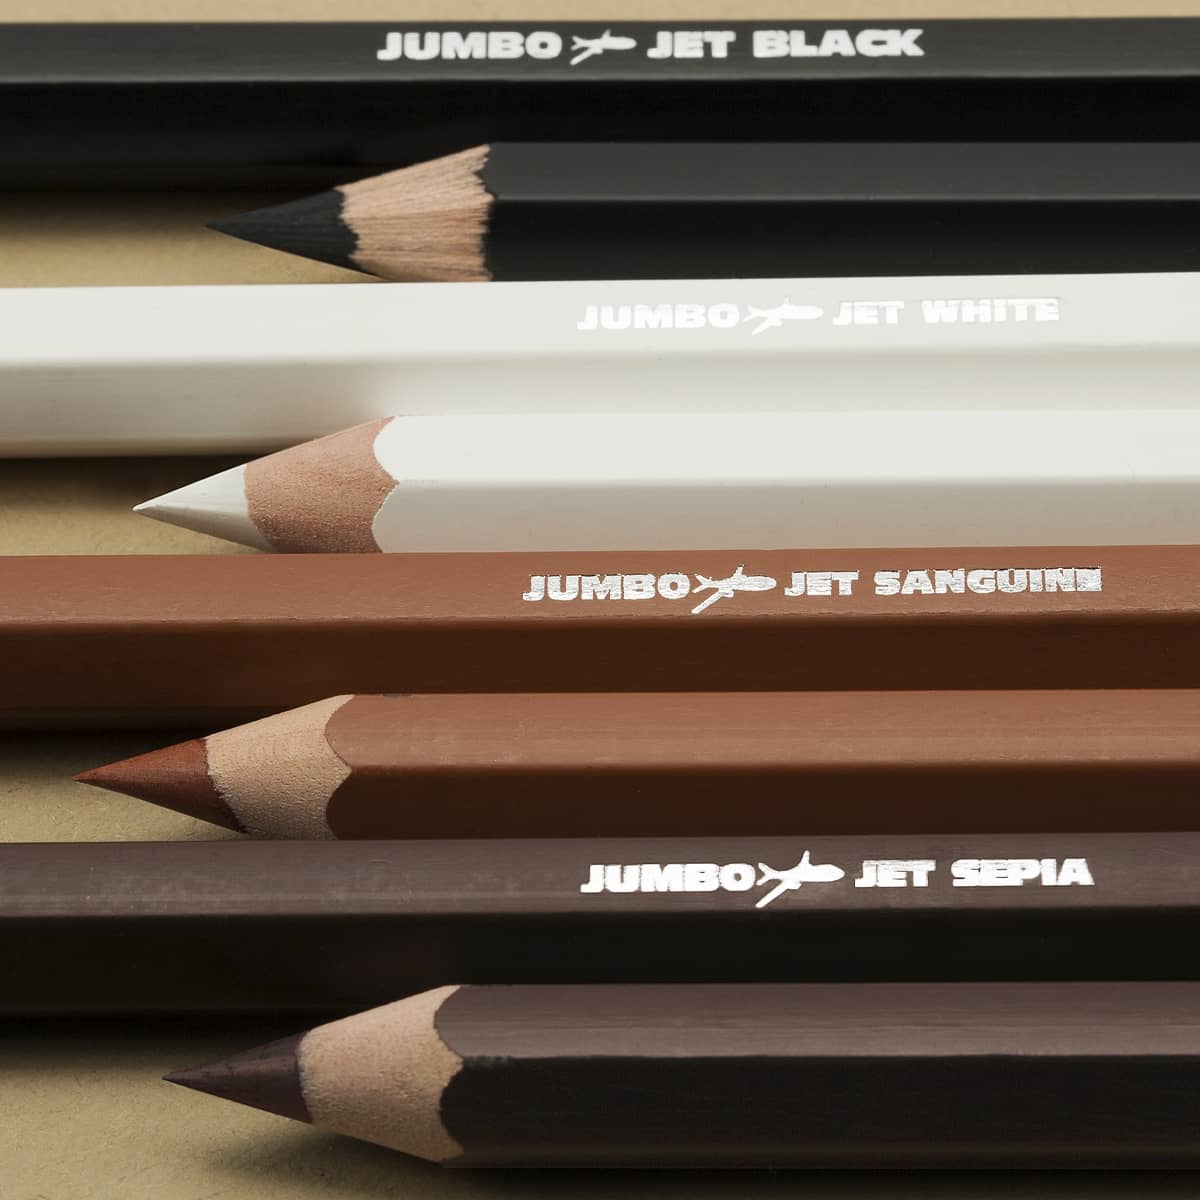 Jerrys jumbo jet pencils